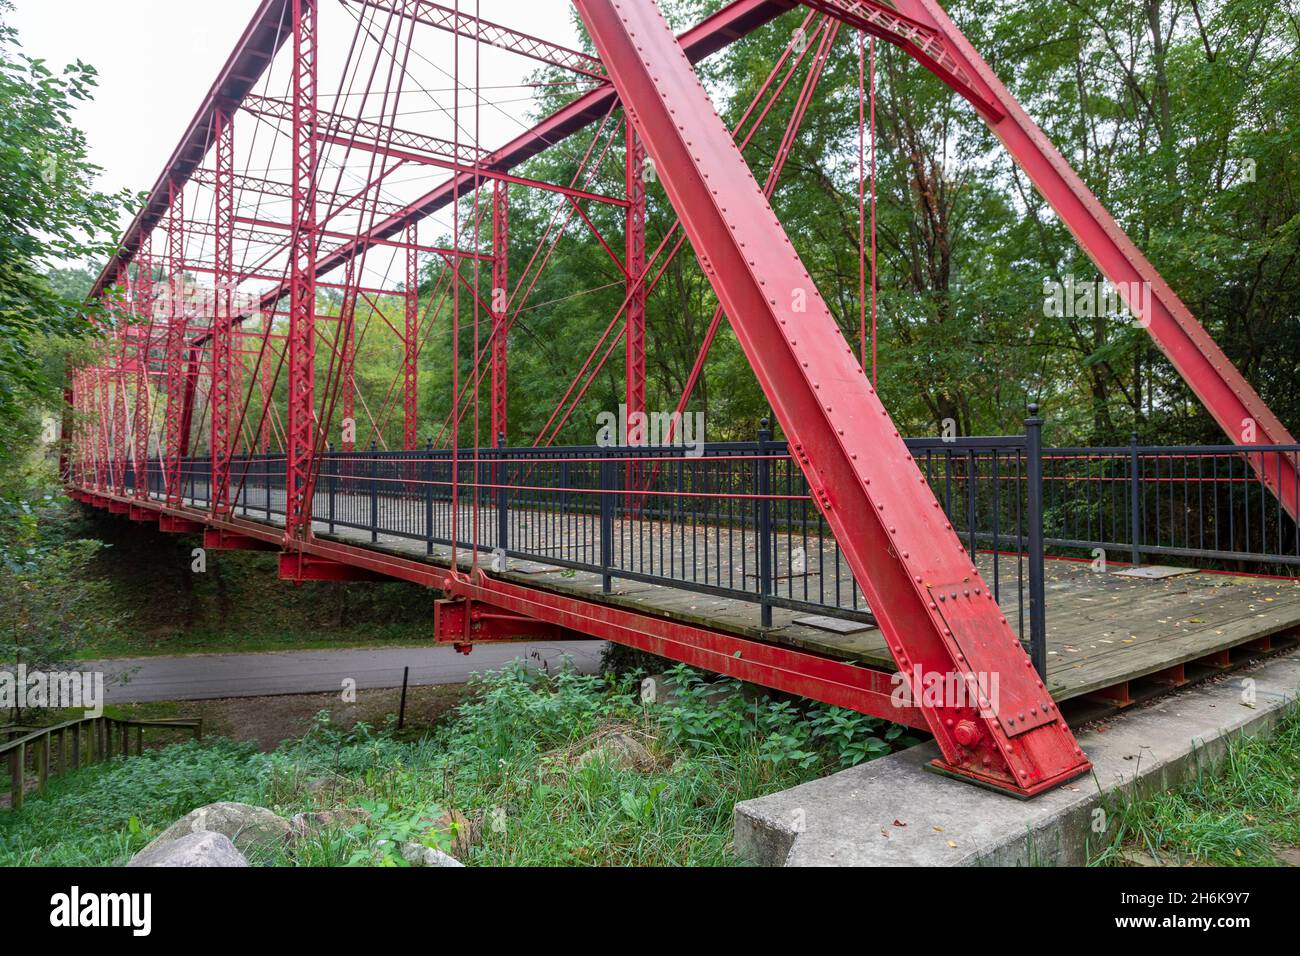 Battle Creek, Michigan - The Charlotte Highway Bridge, originally built in 1886 by Buckeye Bridge Works, in Historic Bridge Park. The Calhoun County p Stock Photo